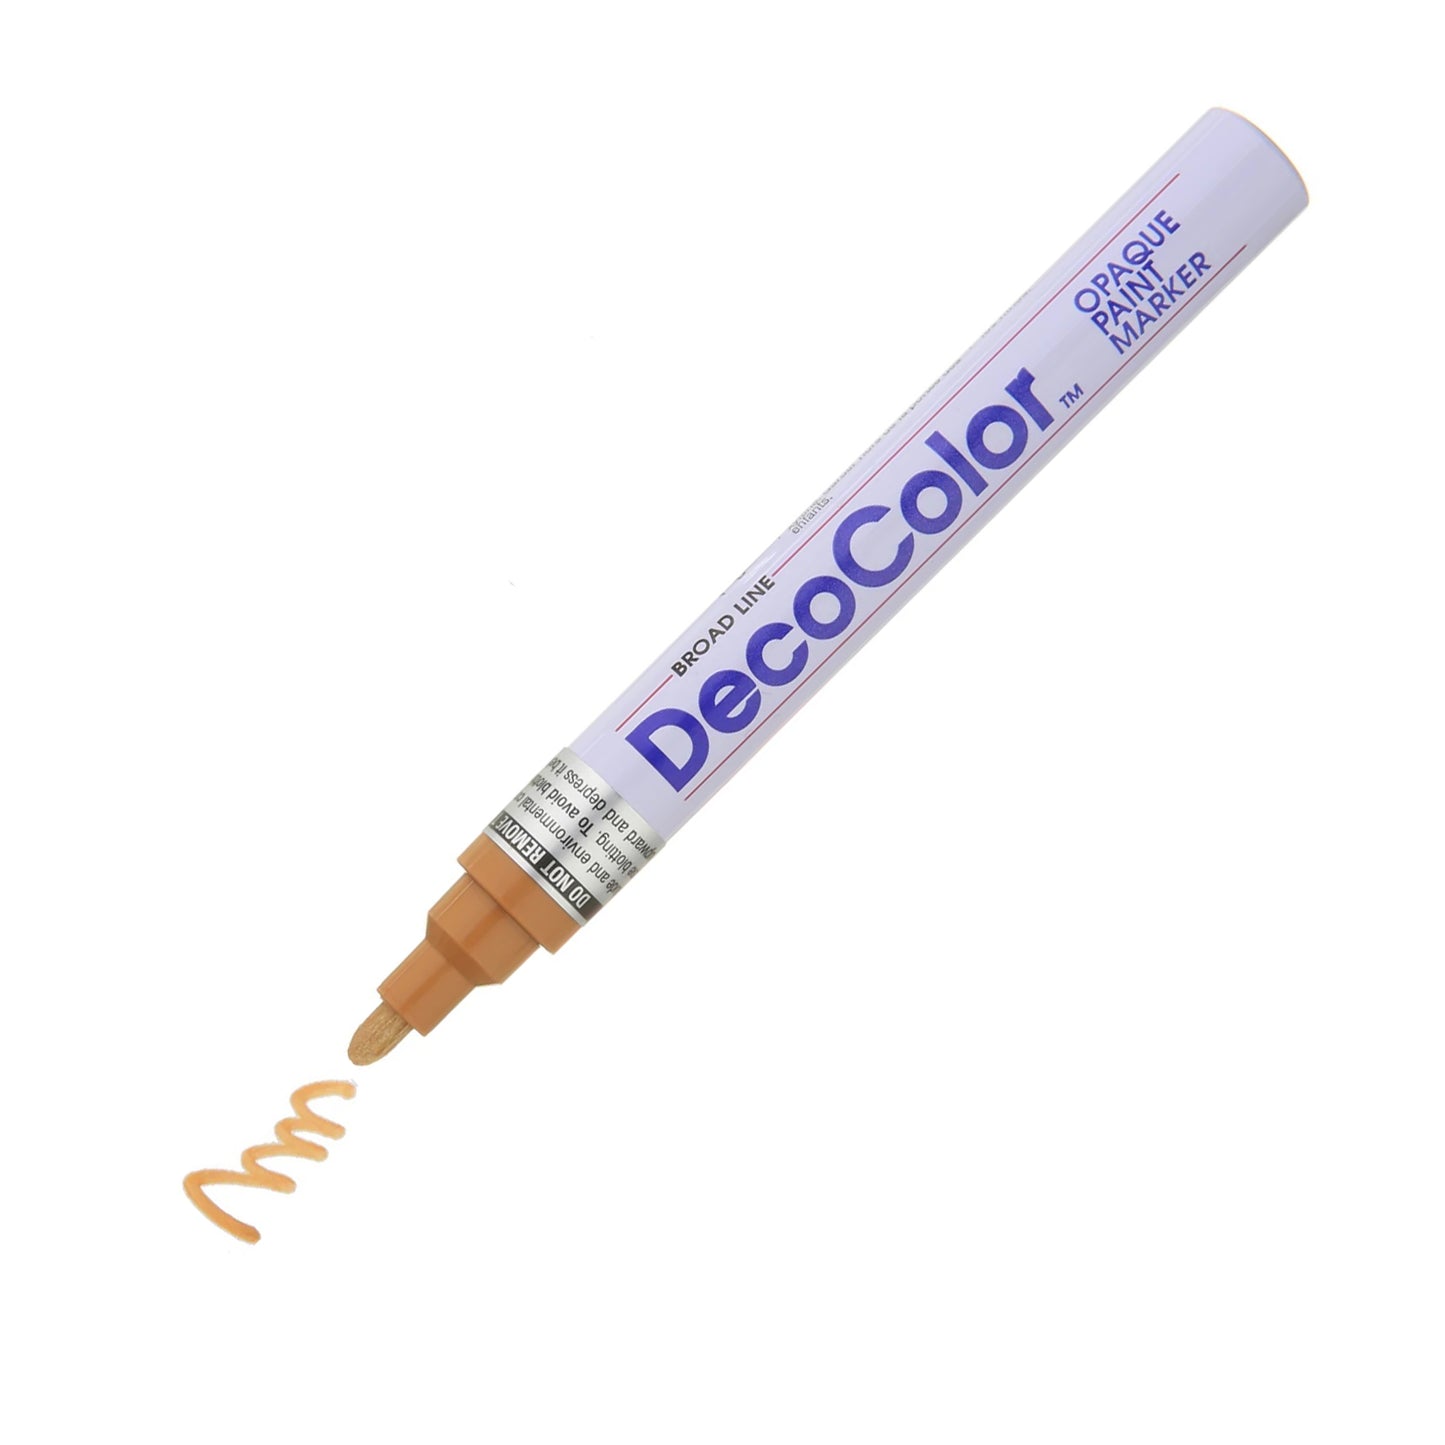 Pennarello a vernice Decocolor, punta tonda larga 6 mm